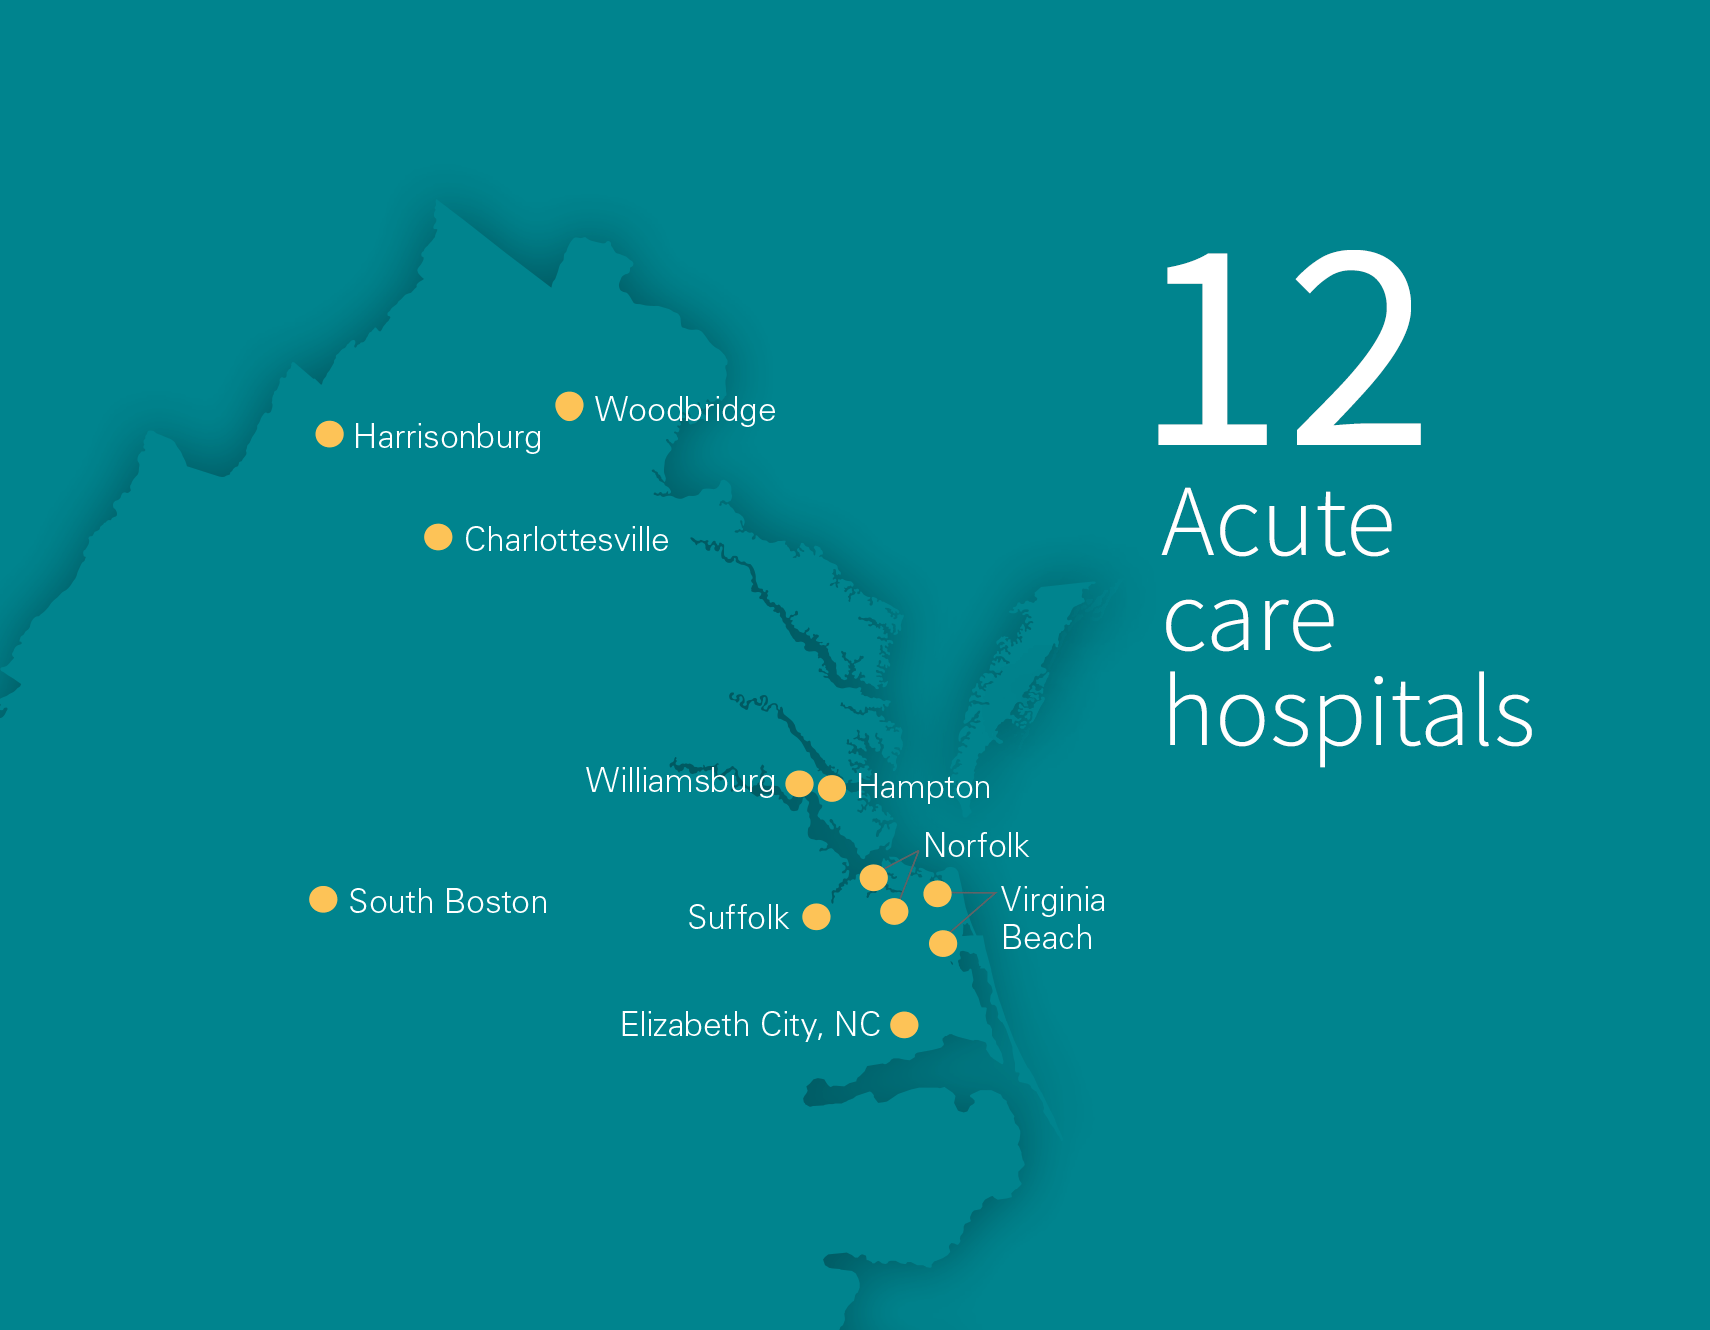 Sentara Graphic showing 12 acute care hospitals